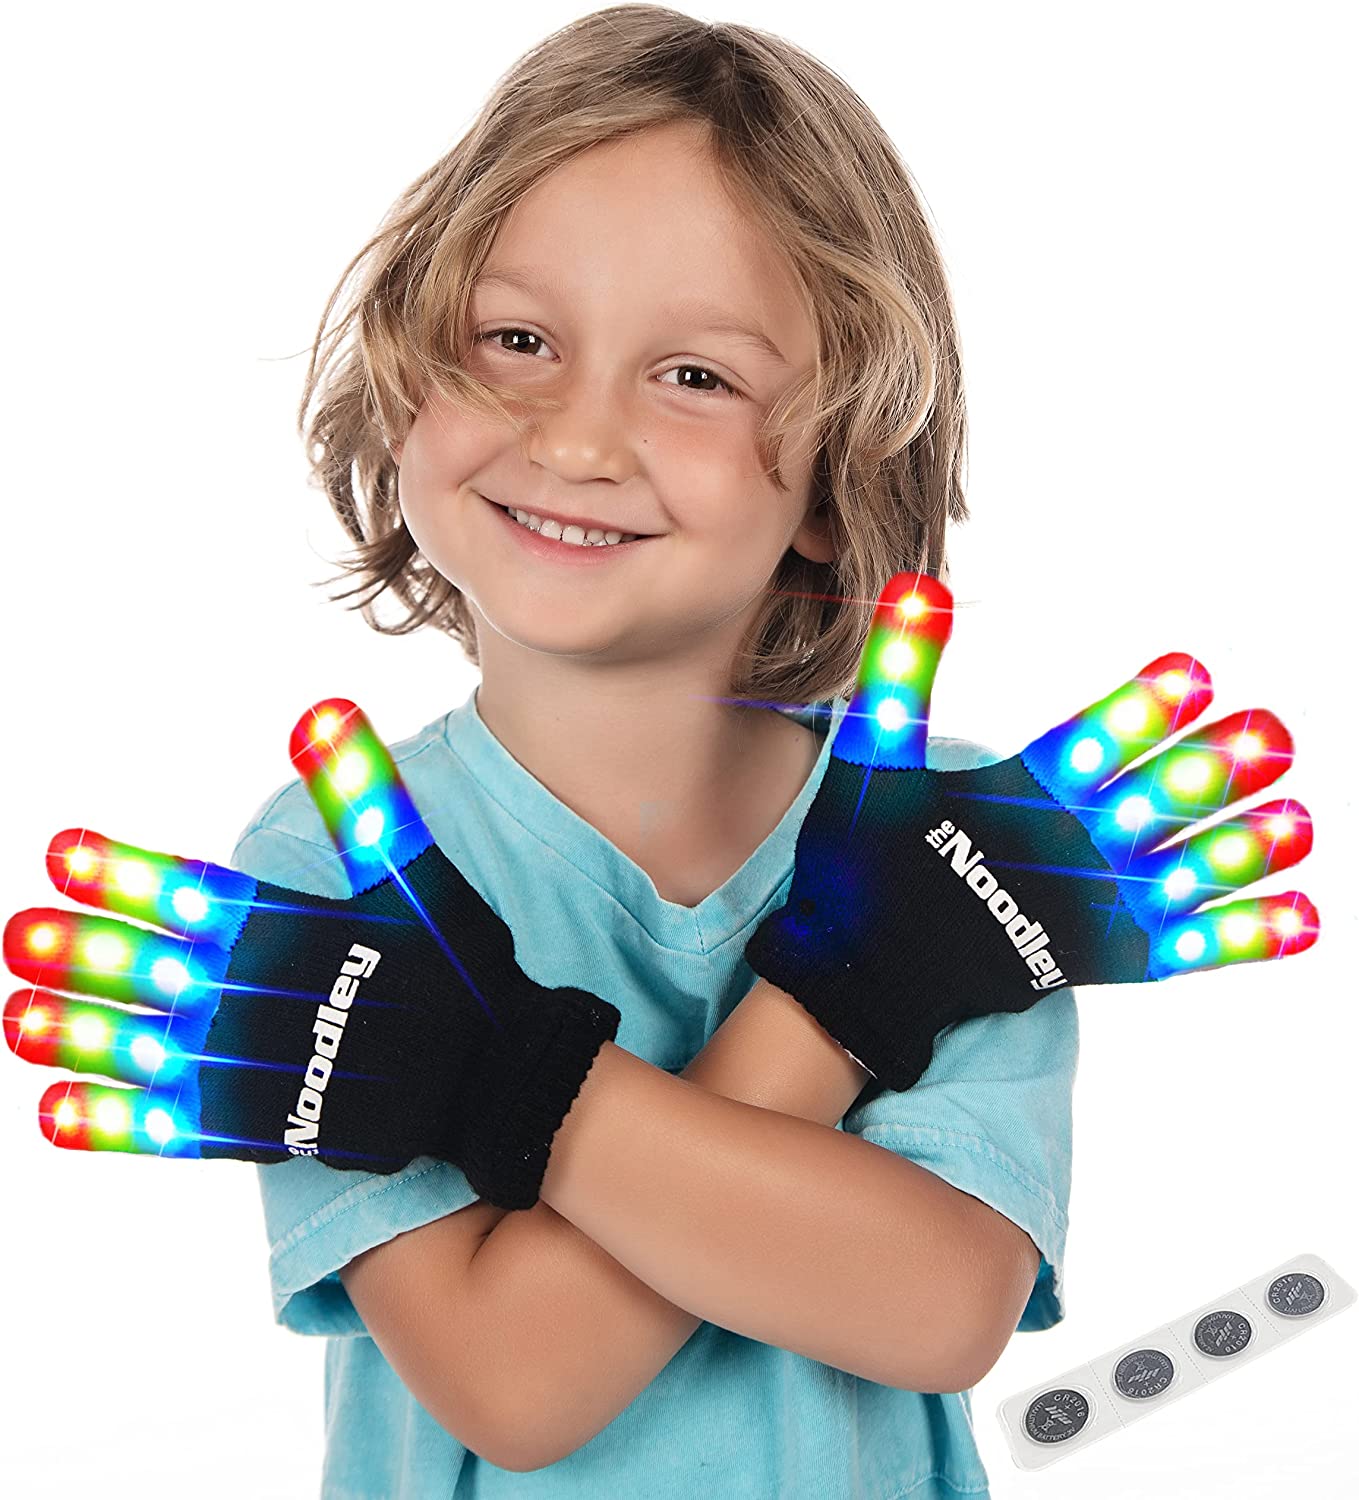 The Noodley Glow Light LED Gloves